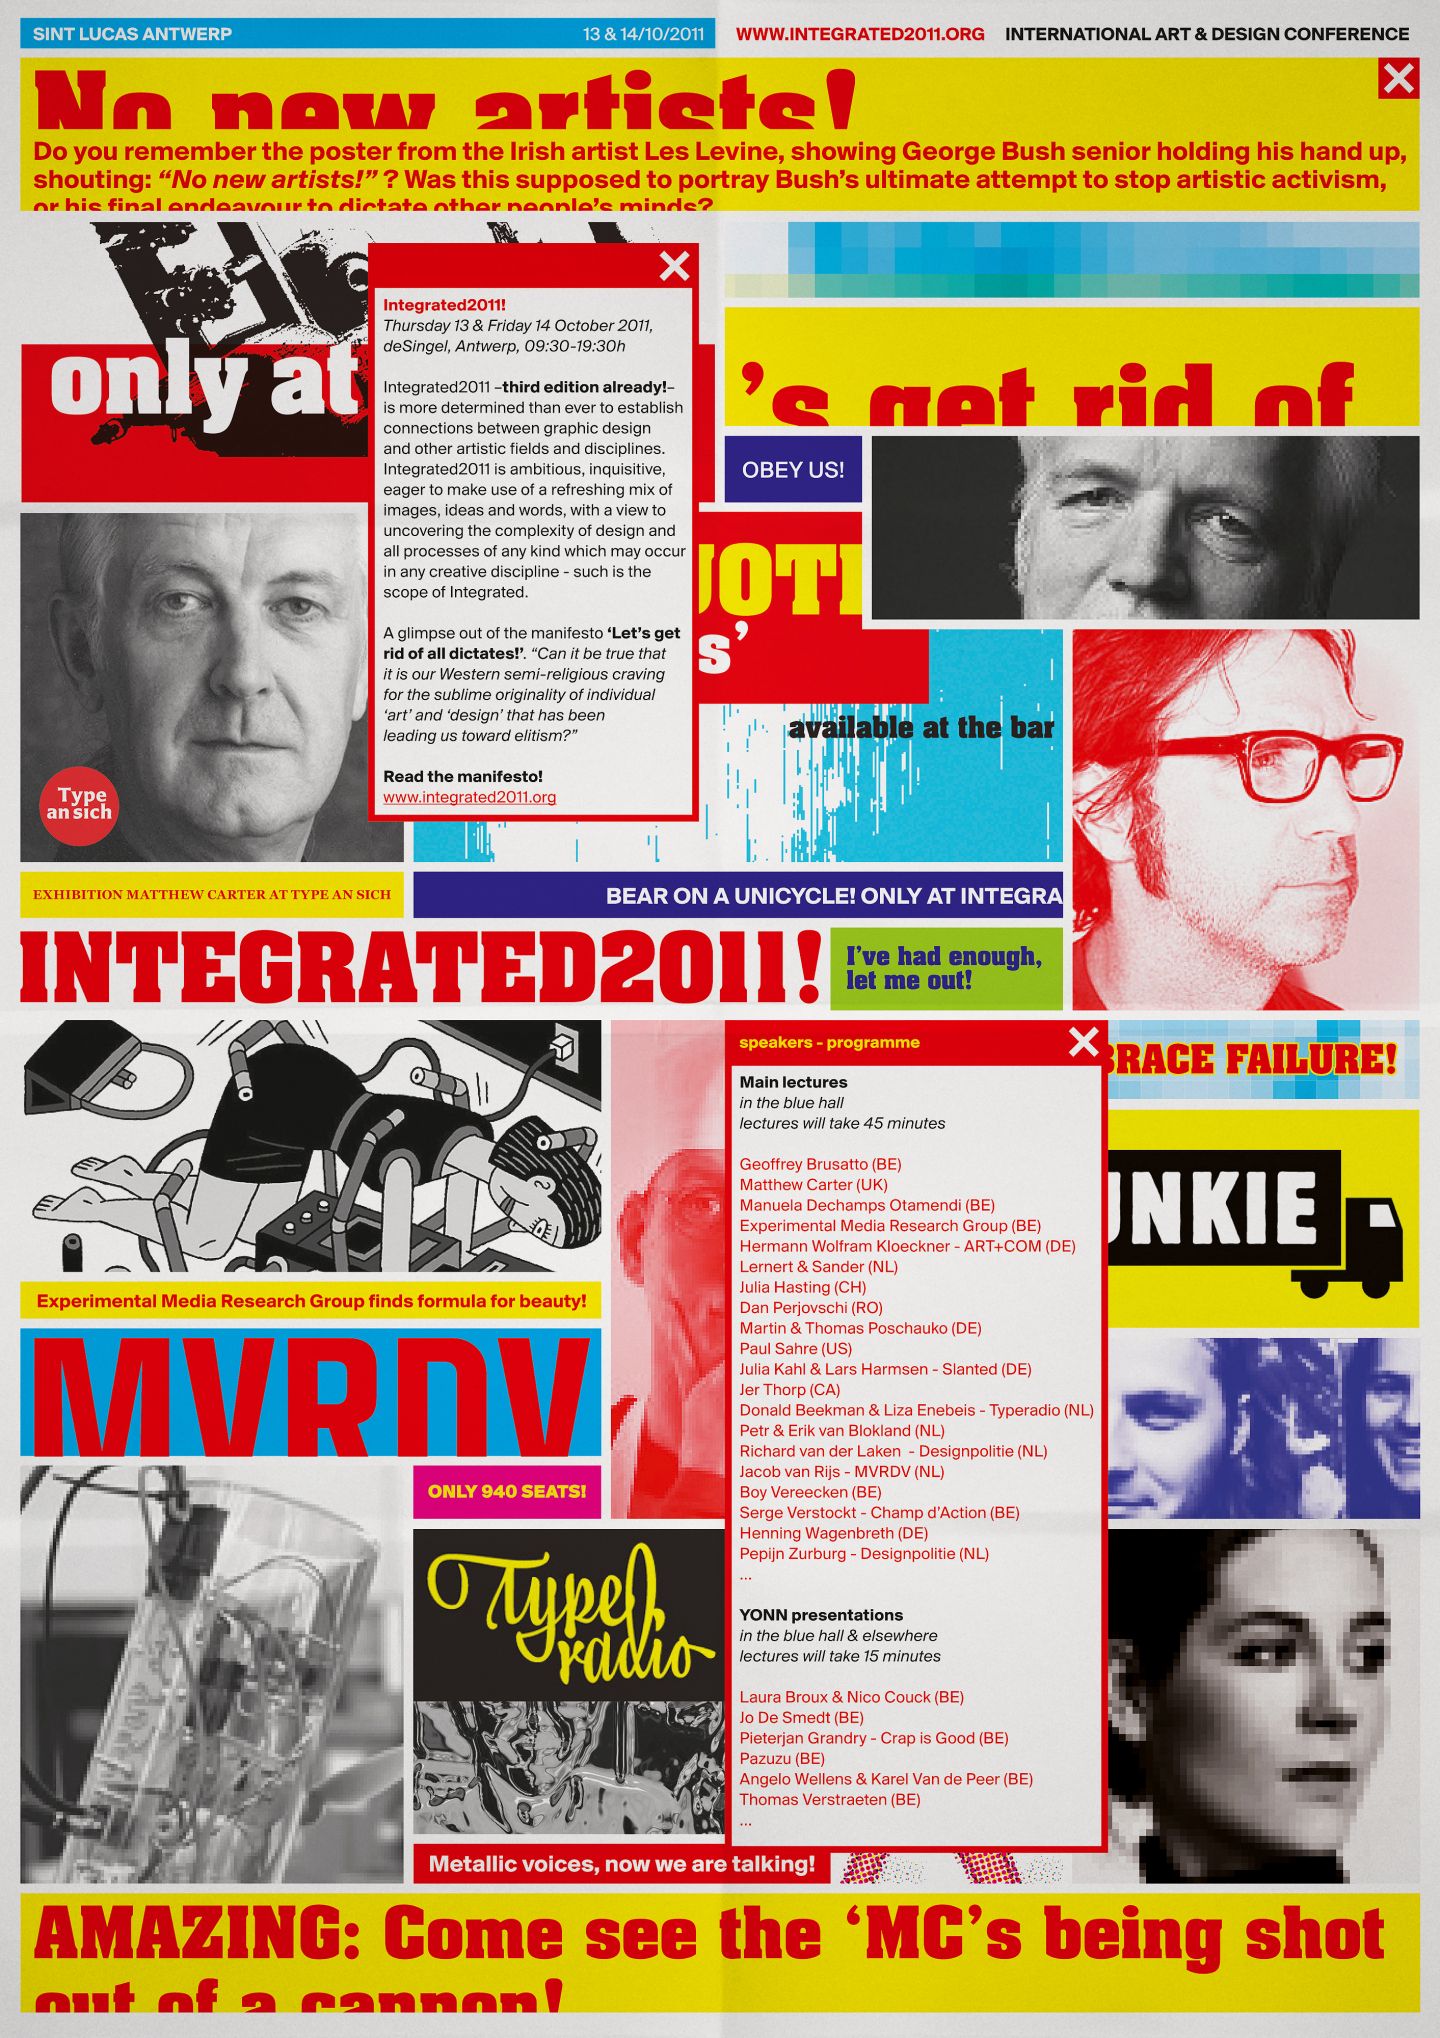 hugo-puttaert-poster-integrated2011